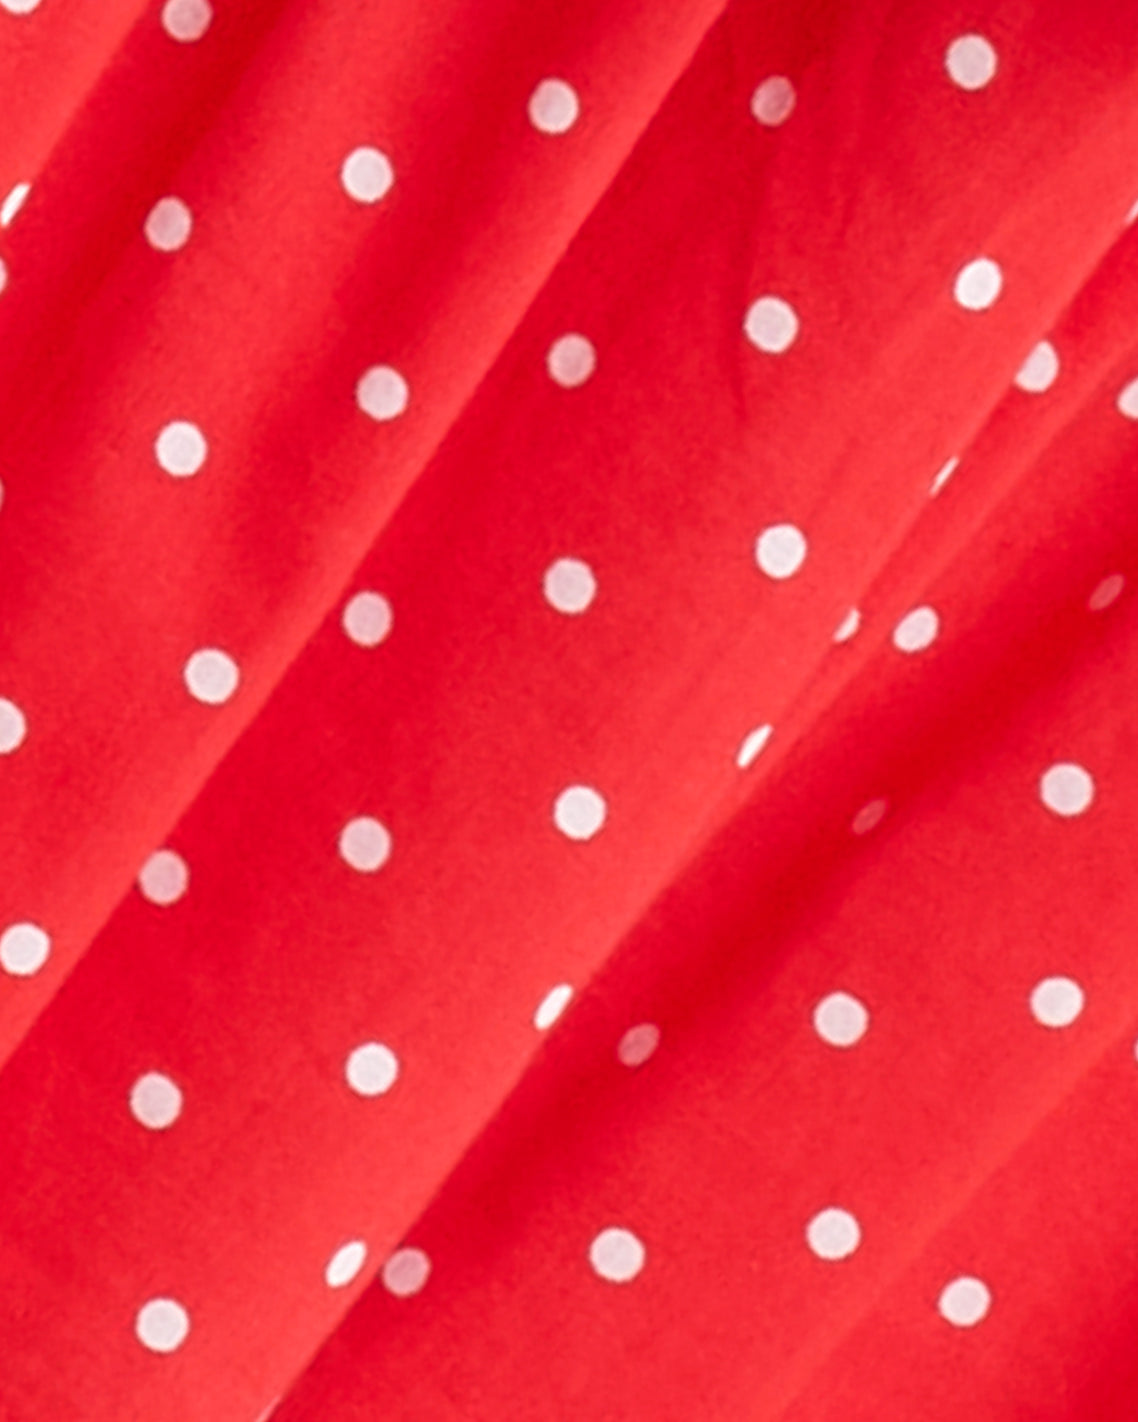 Sawyer Dress in Red Polka Dot